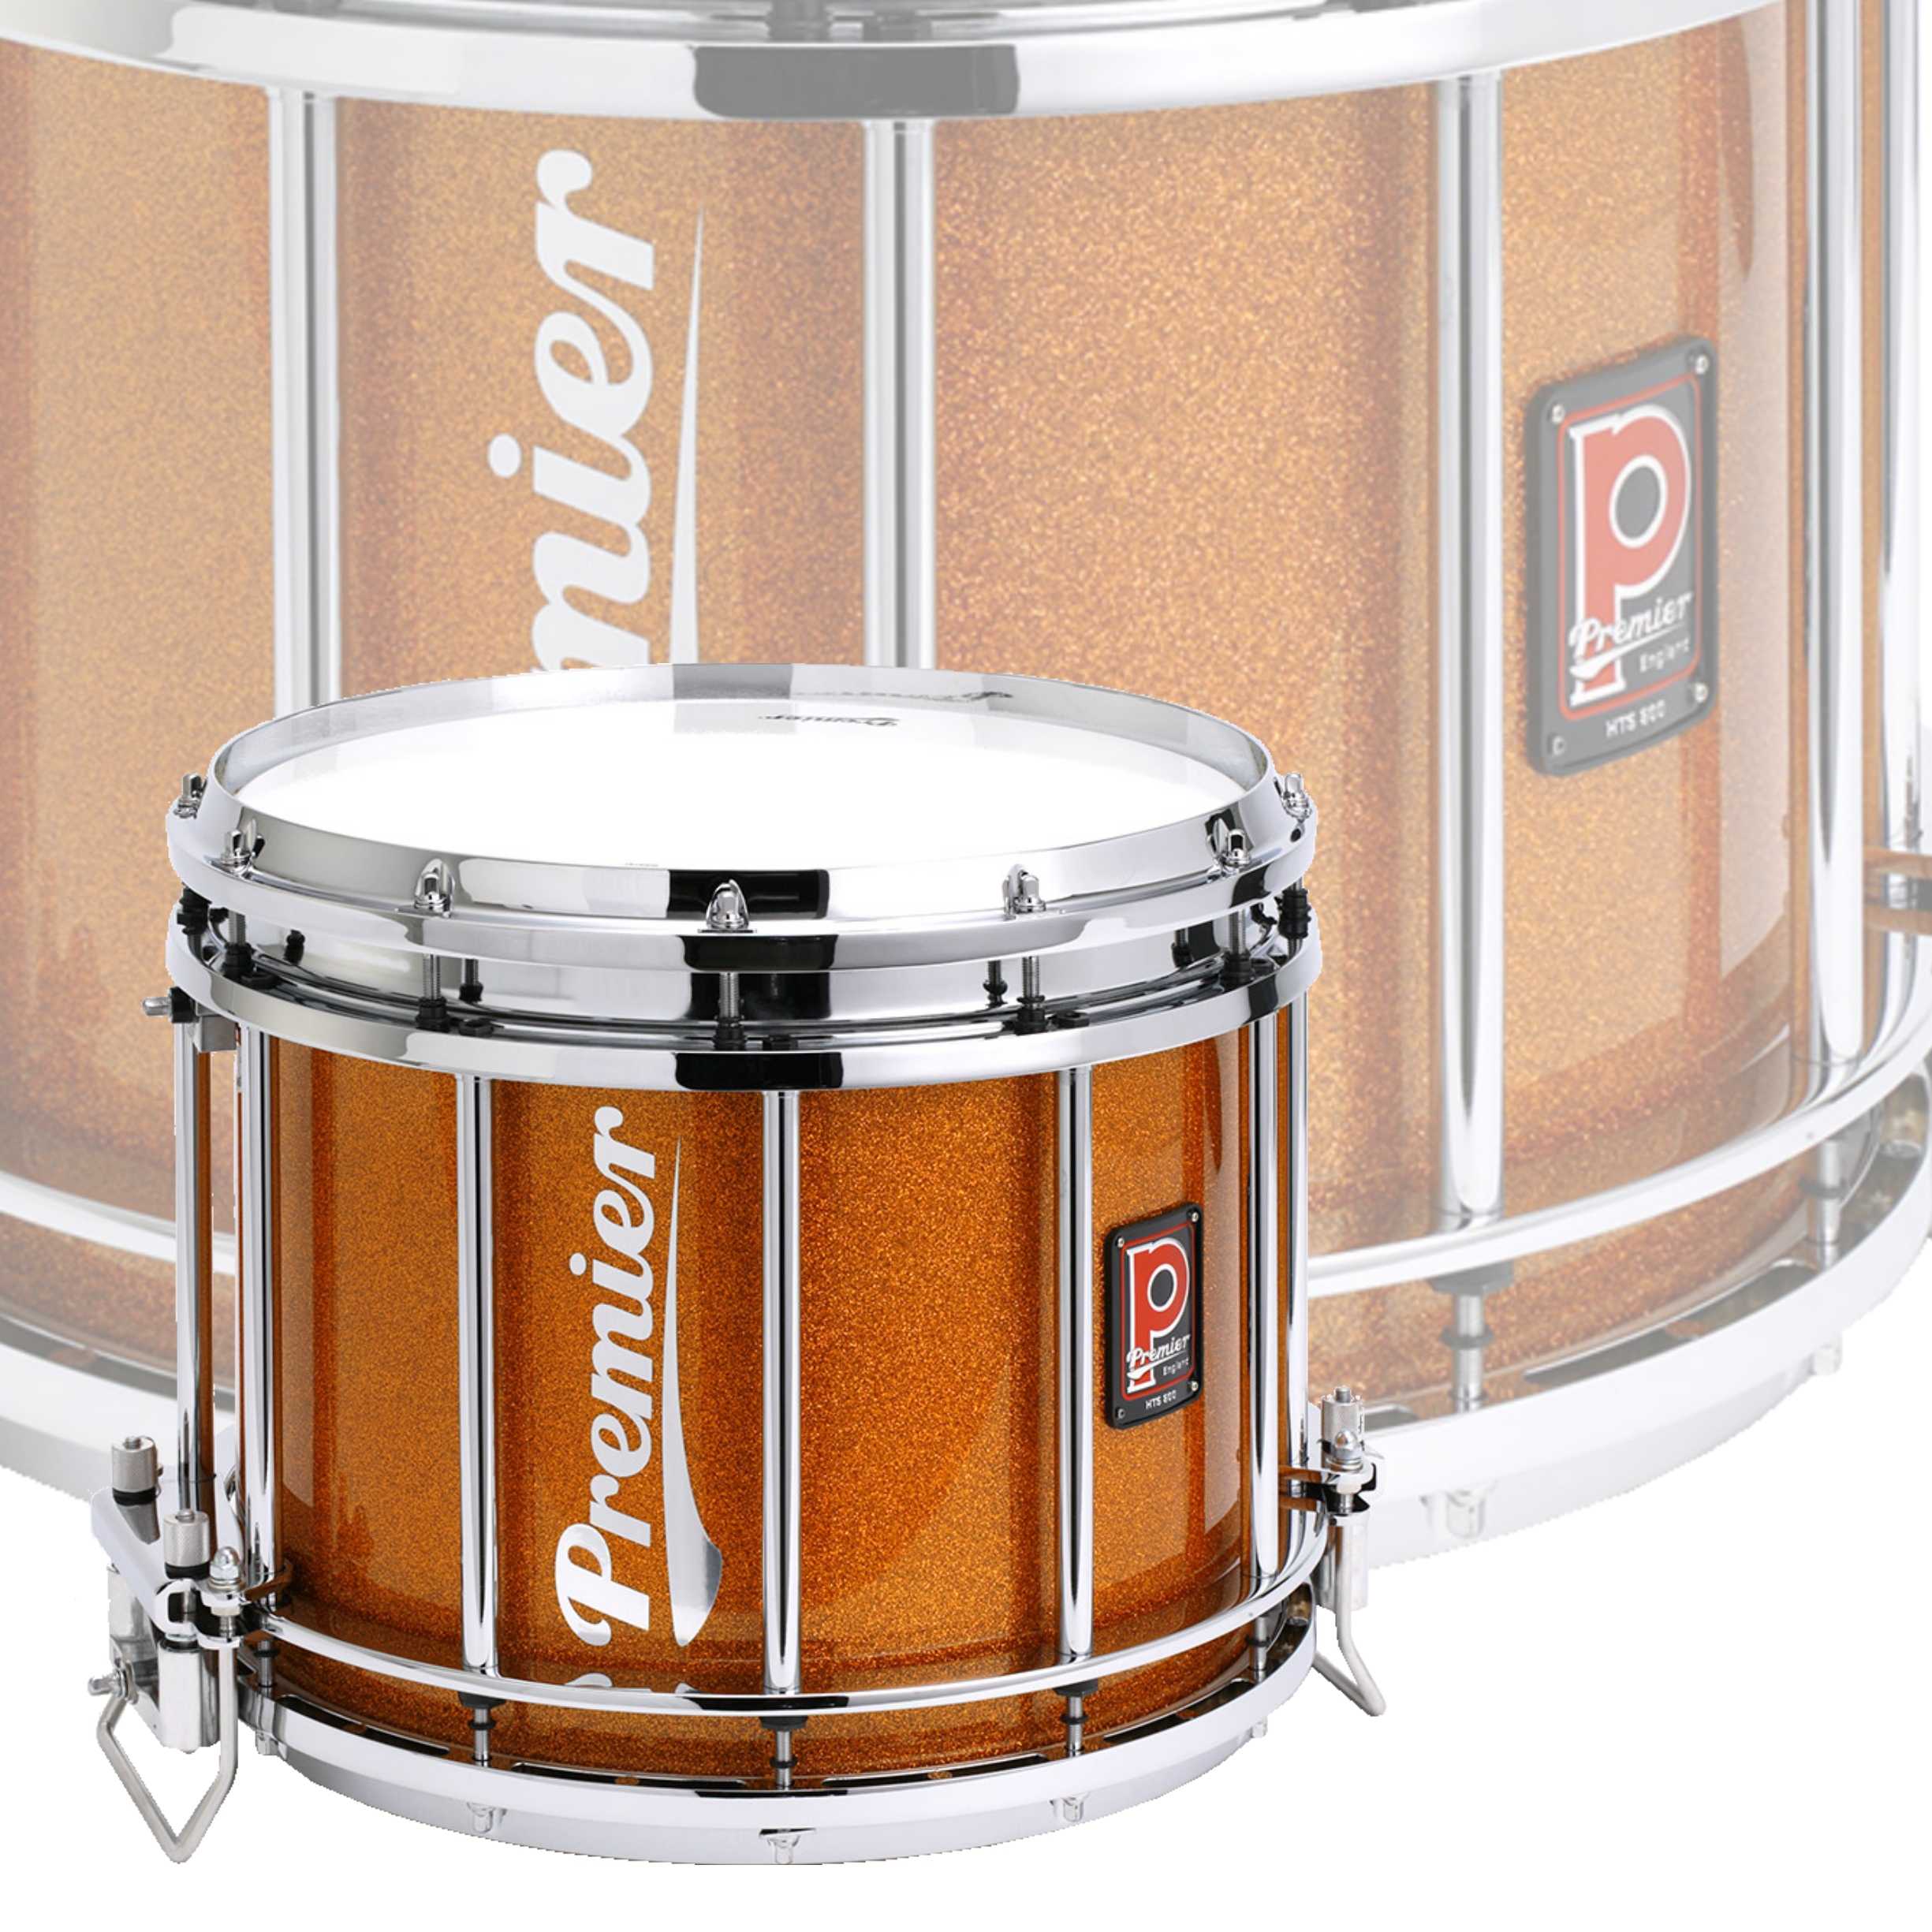 Premier Pipe Band HTS-0800SPX-C 14"x12" Side Snare Drum Topaz Sparkle - Chrome